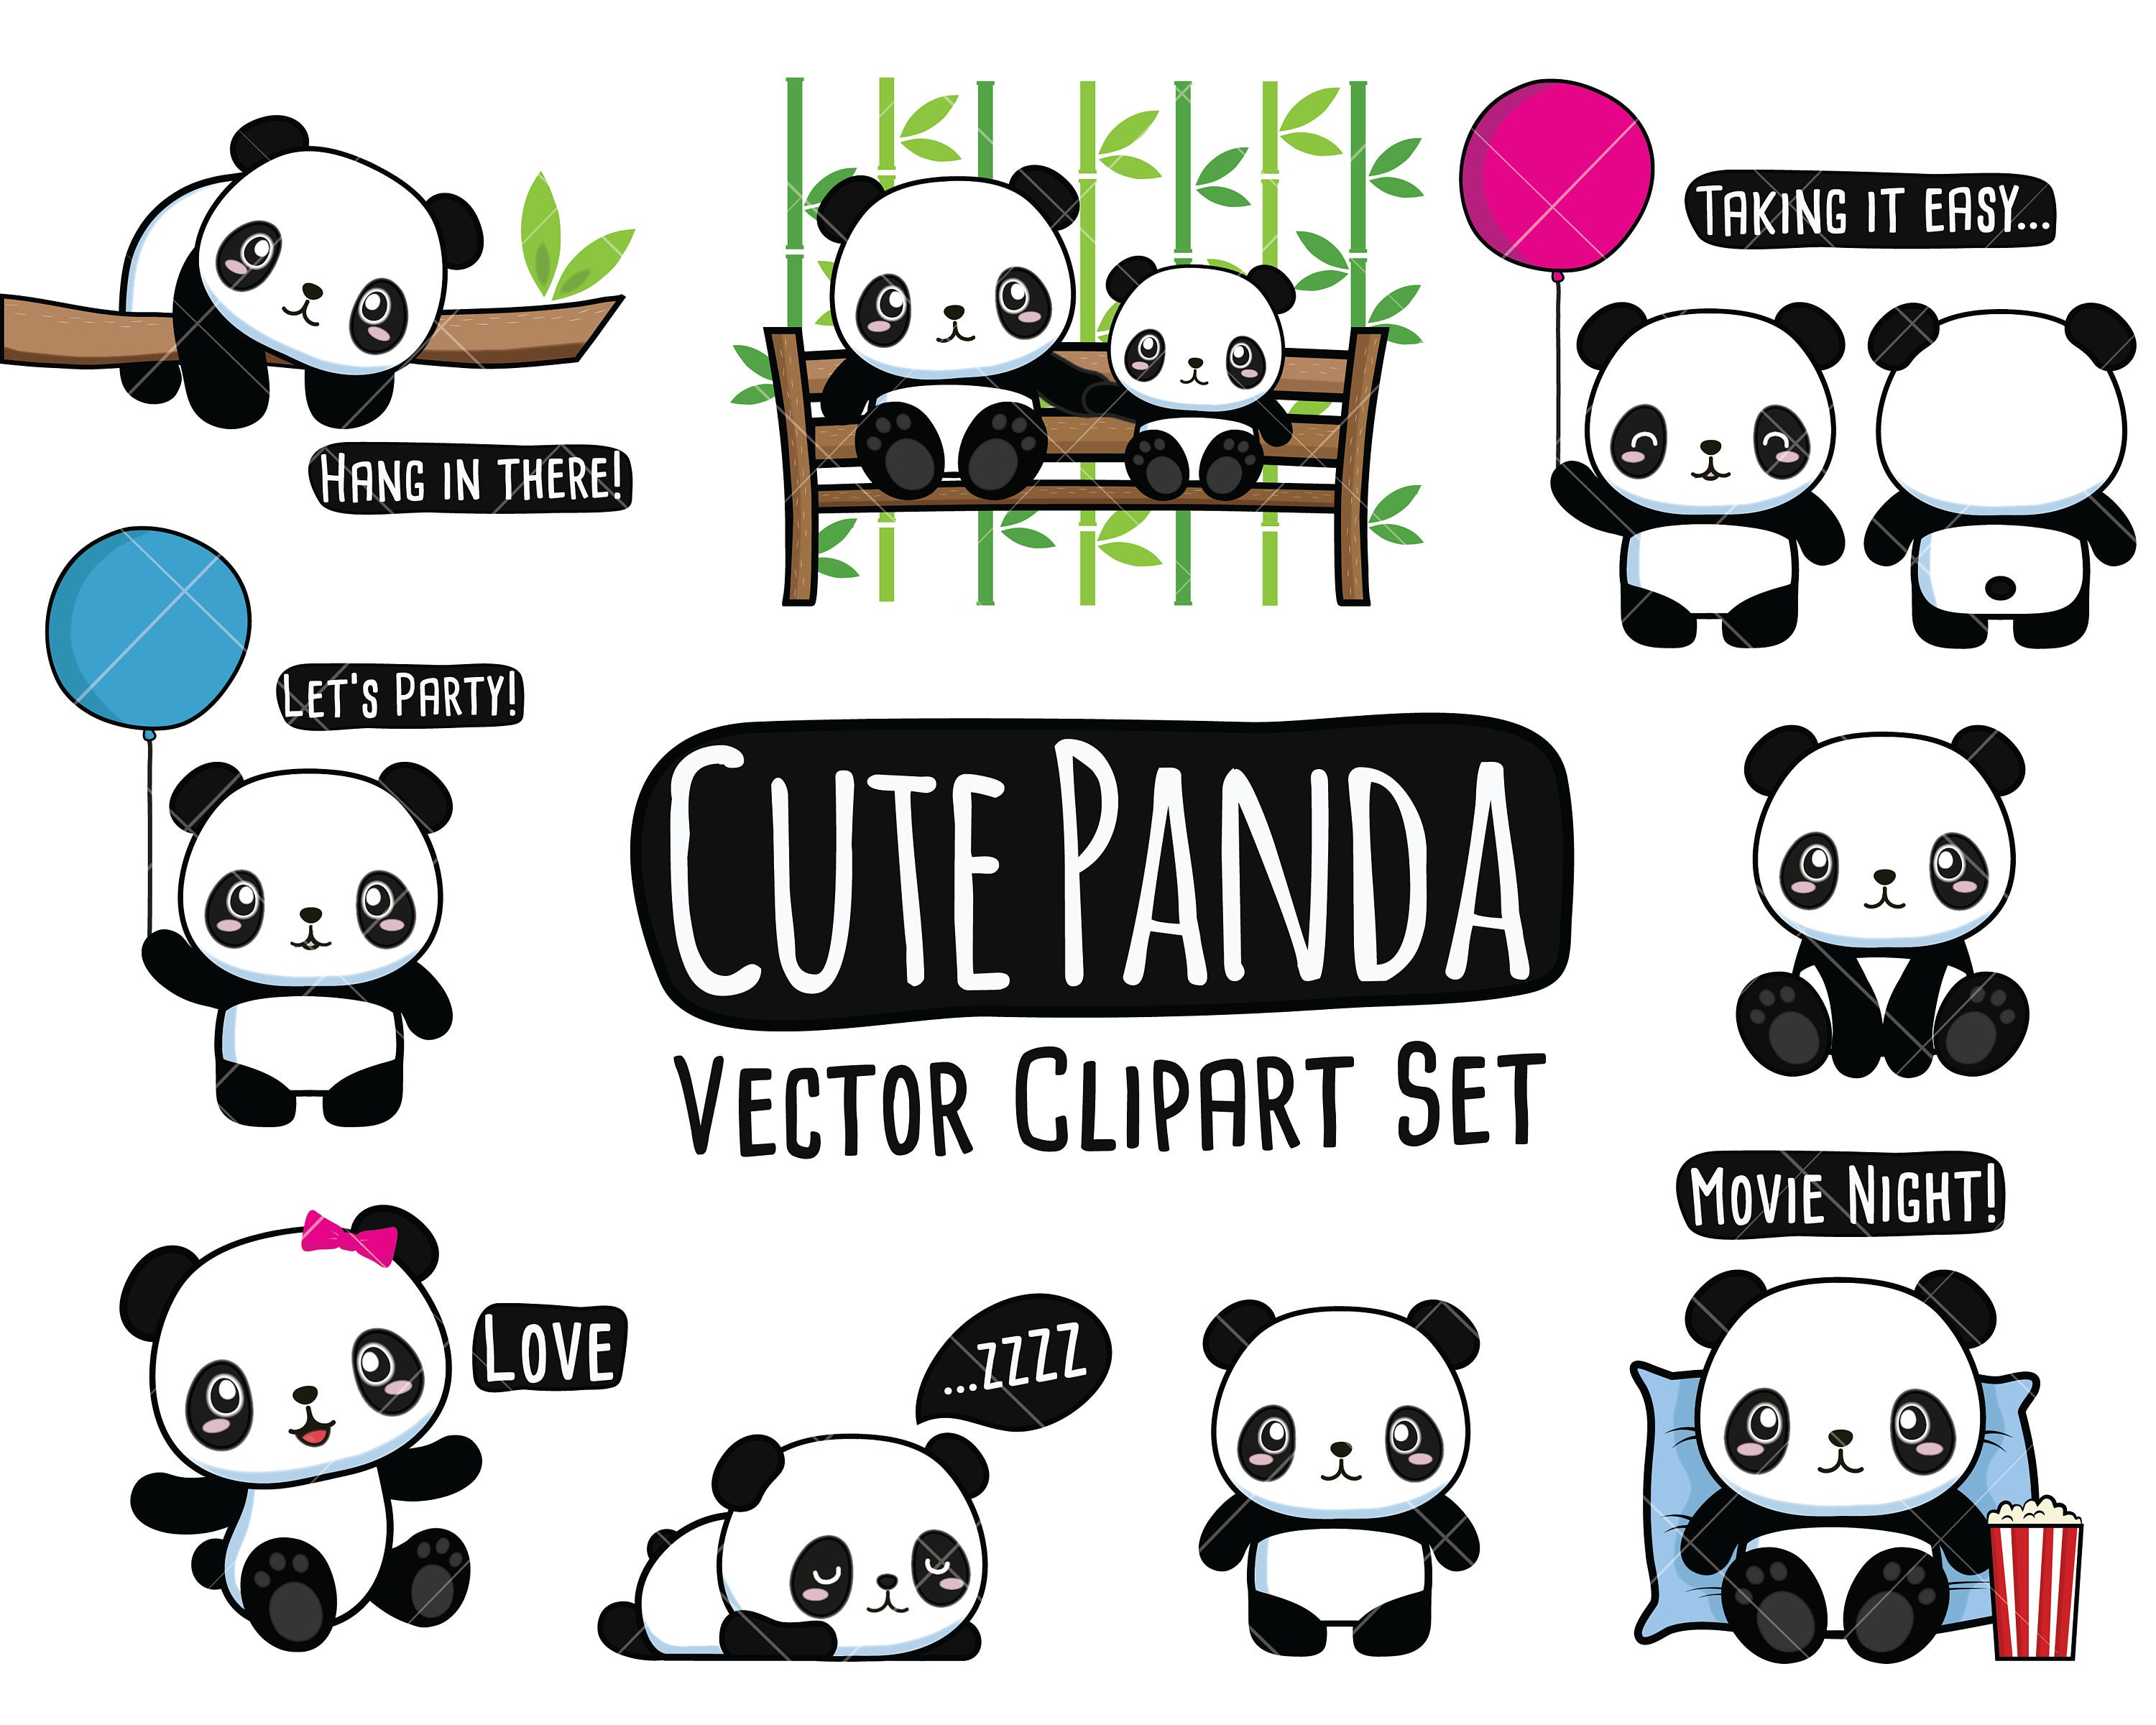 Kawaii Panda Bear Animal Icon Over White Background. Vector Illustration  Royalty Free SVG, Cliparts, Vectors, and Stock Illustration. Image 76632866.